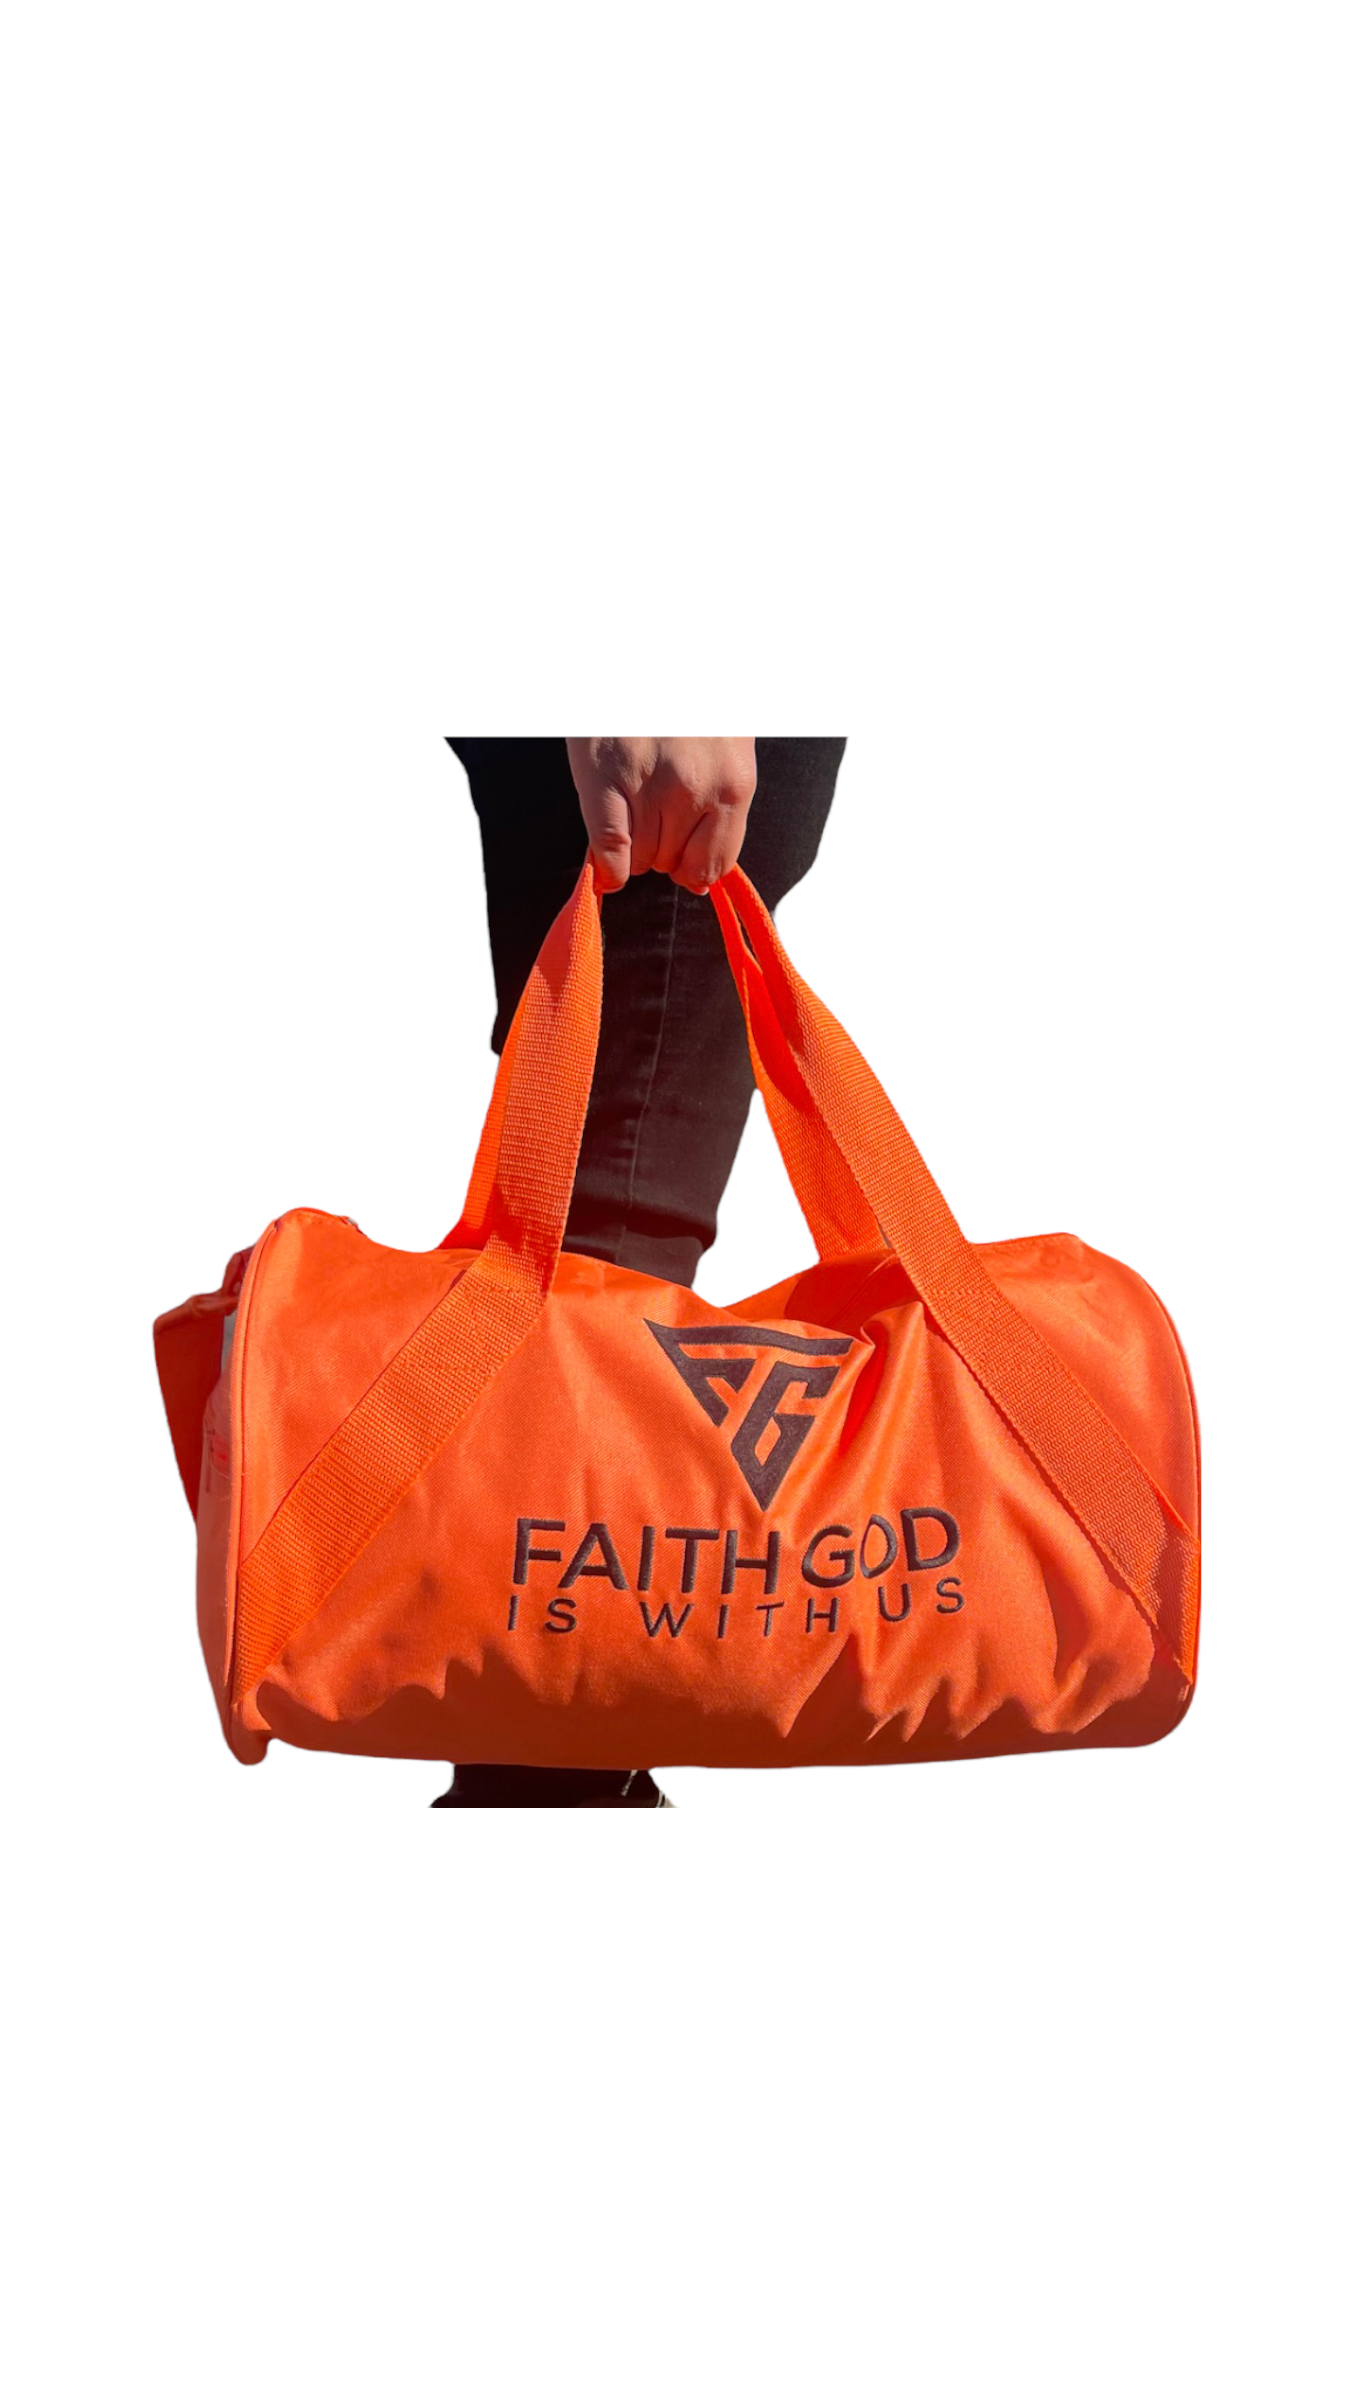 Limited Edition Eco Friendly Orange Duffle Bag